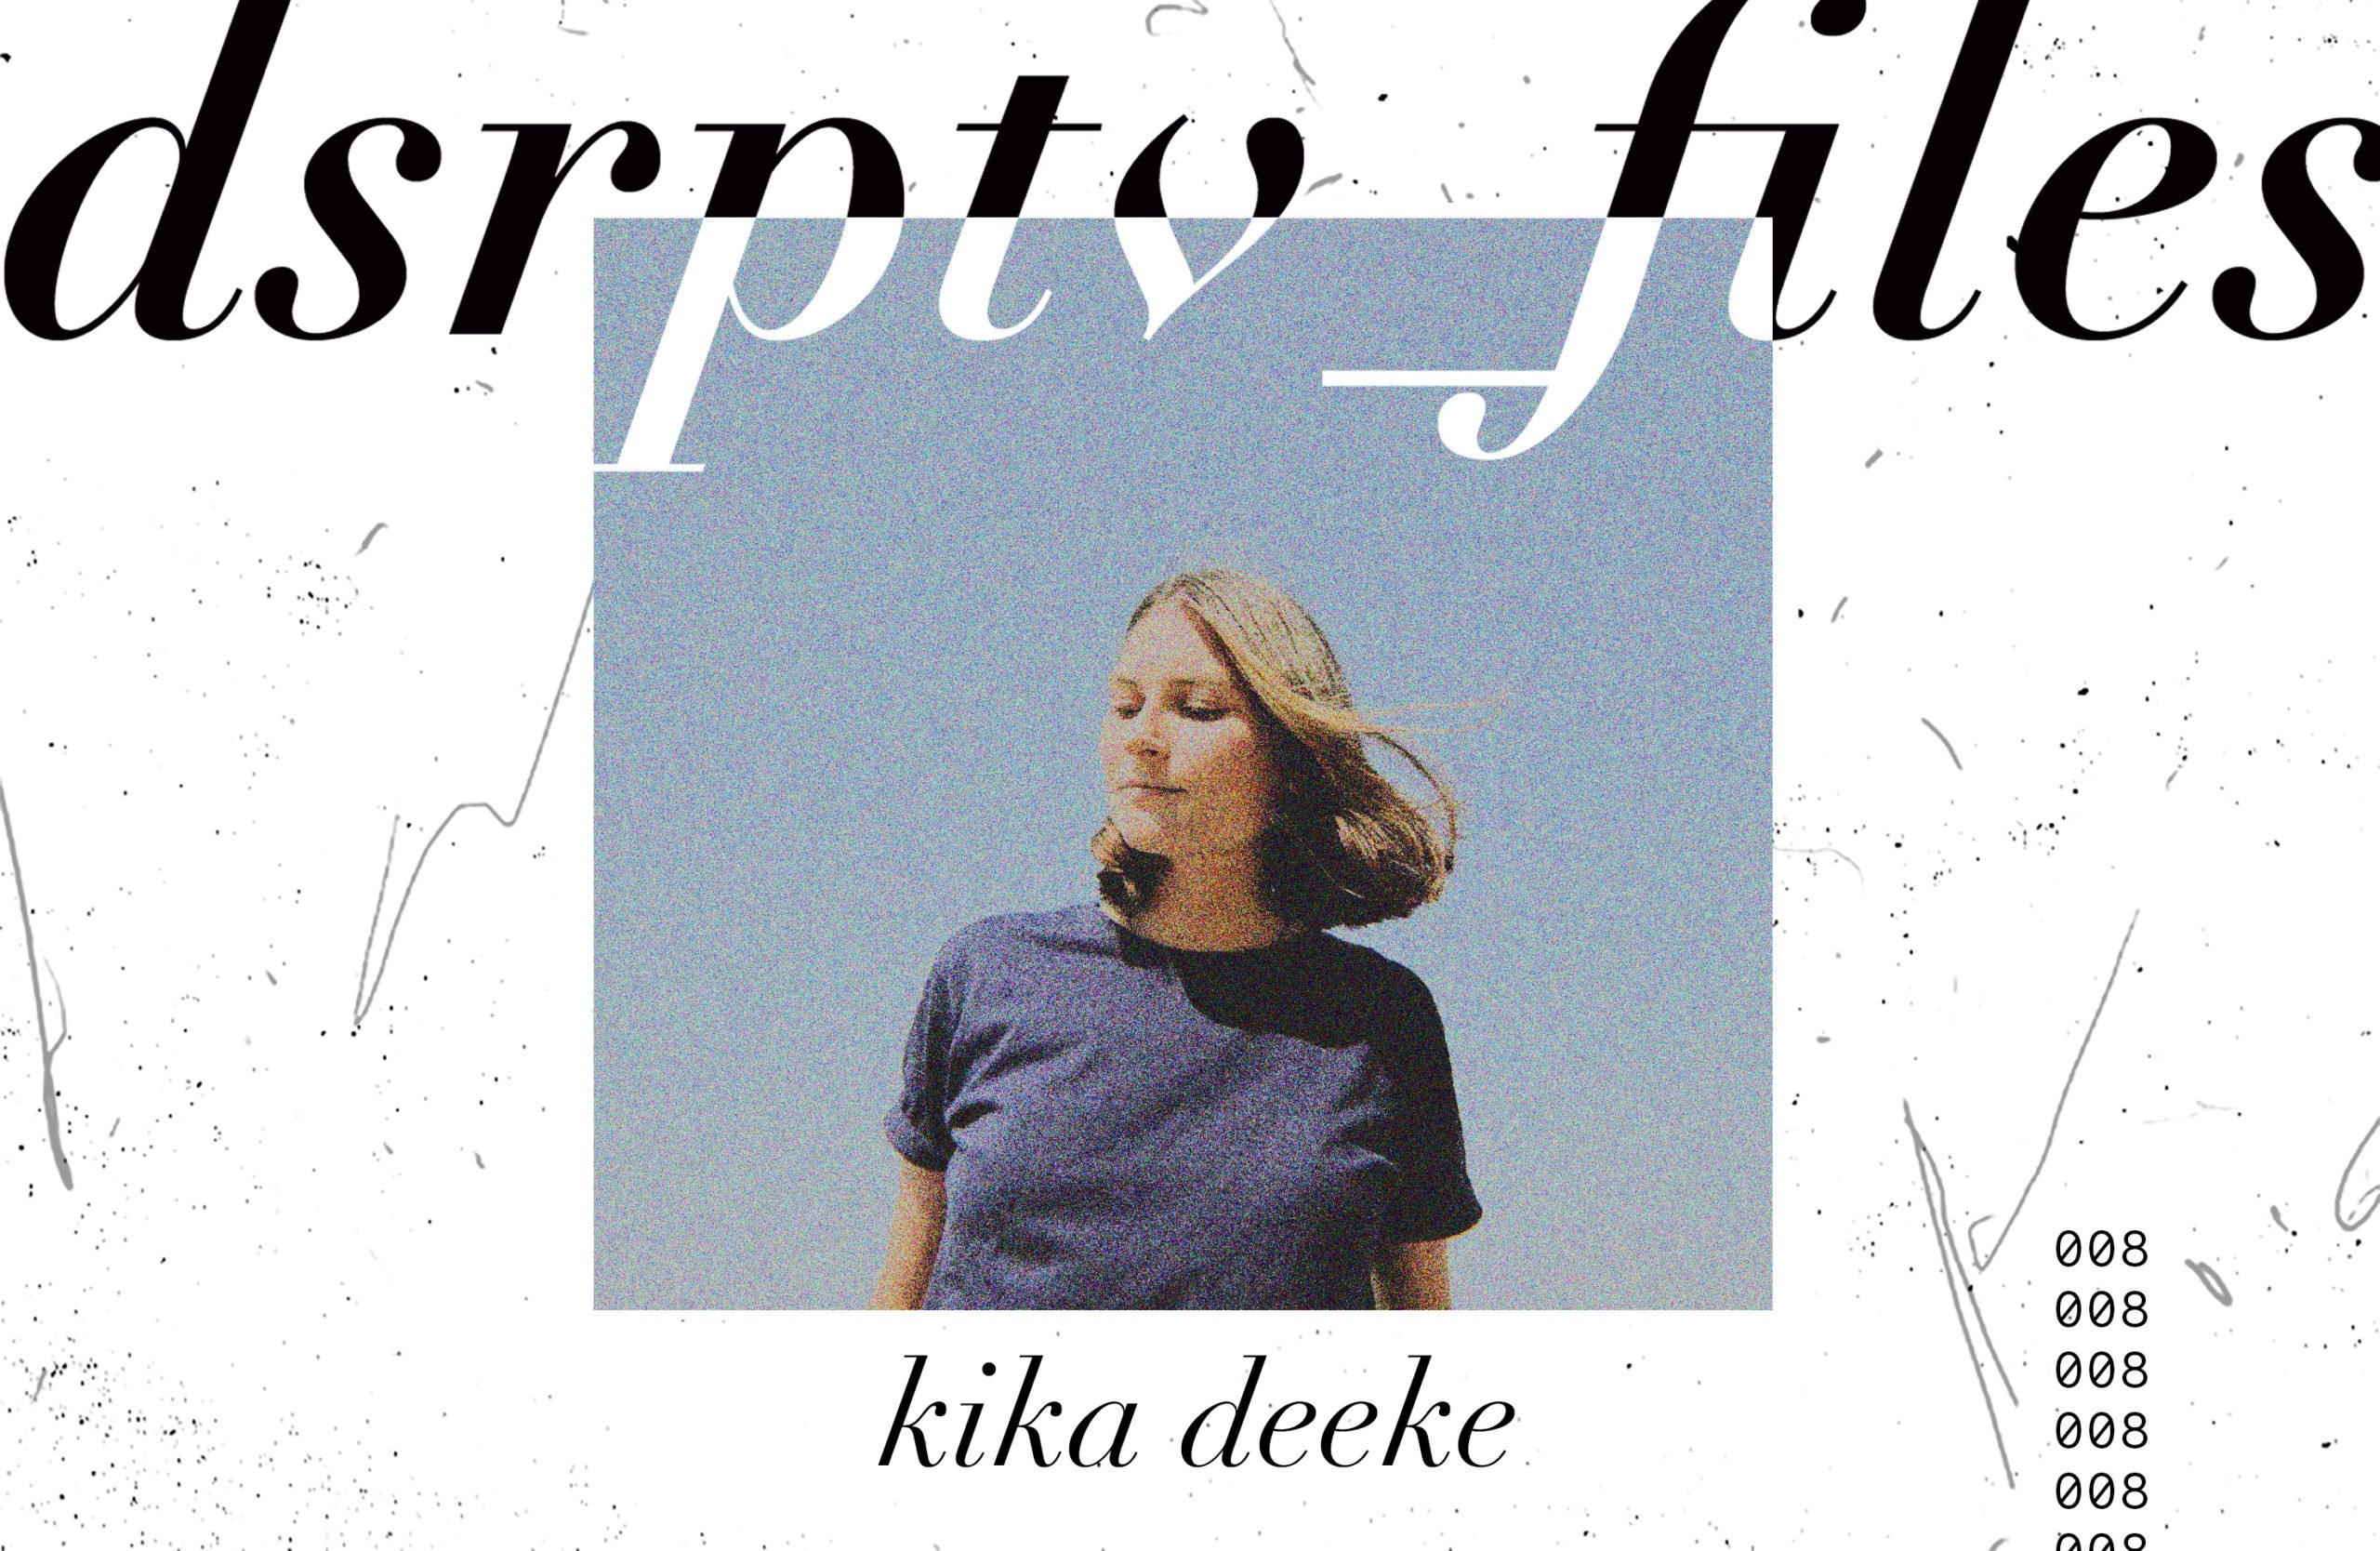 dsrptv_files – Kika Deeke